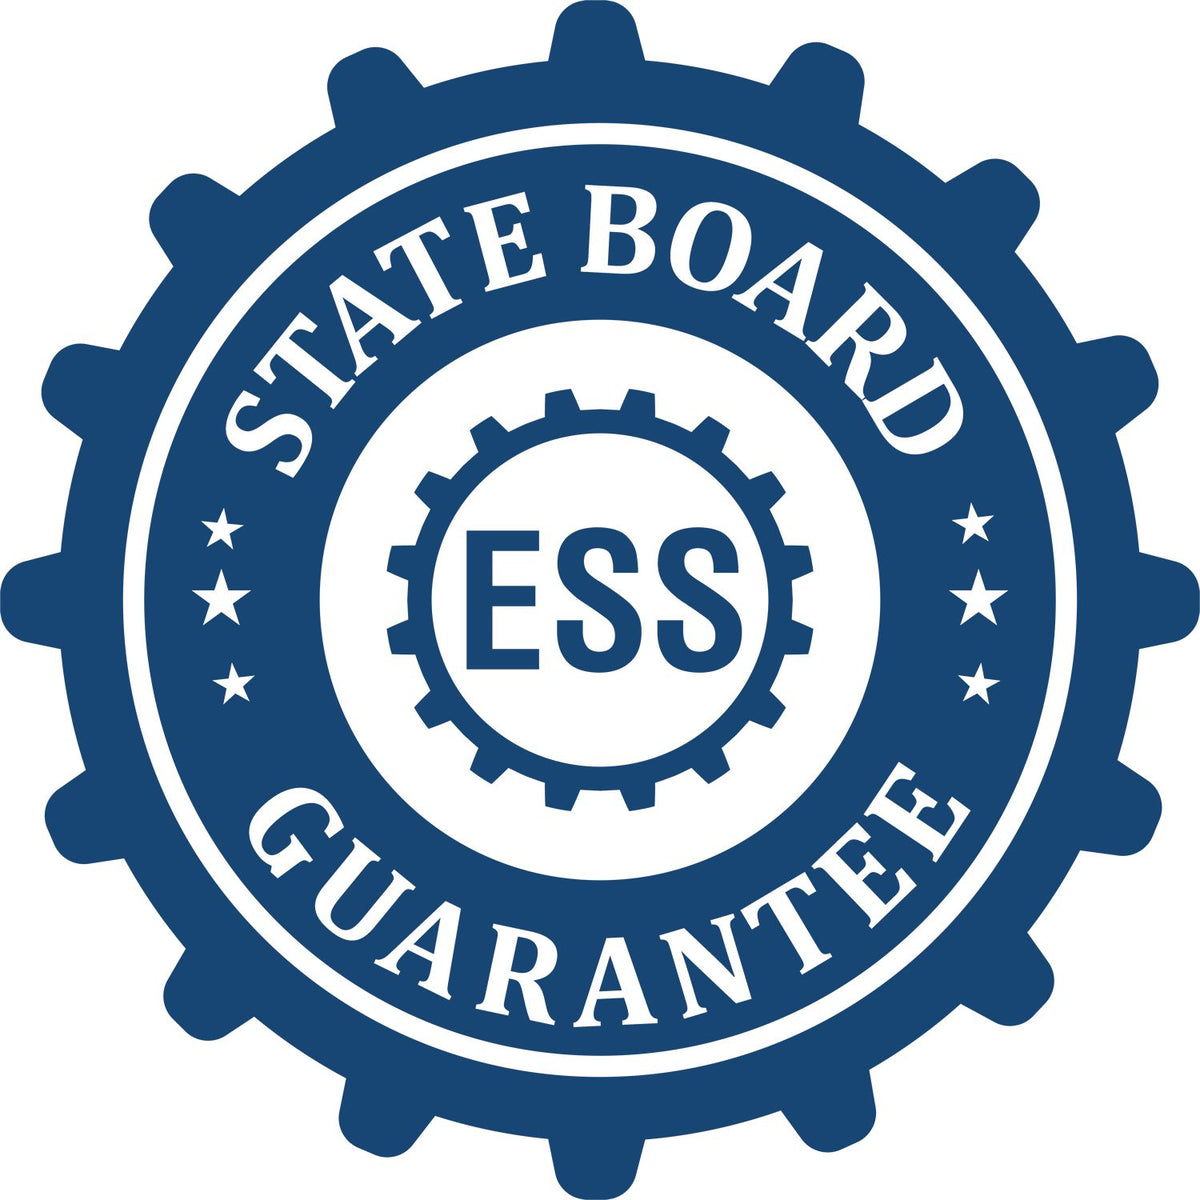 An emblem in a gear shape illustrating a state board guarantee for the Hybrid Nebraska Land Surveyor Seal